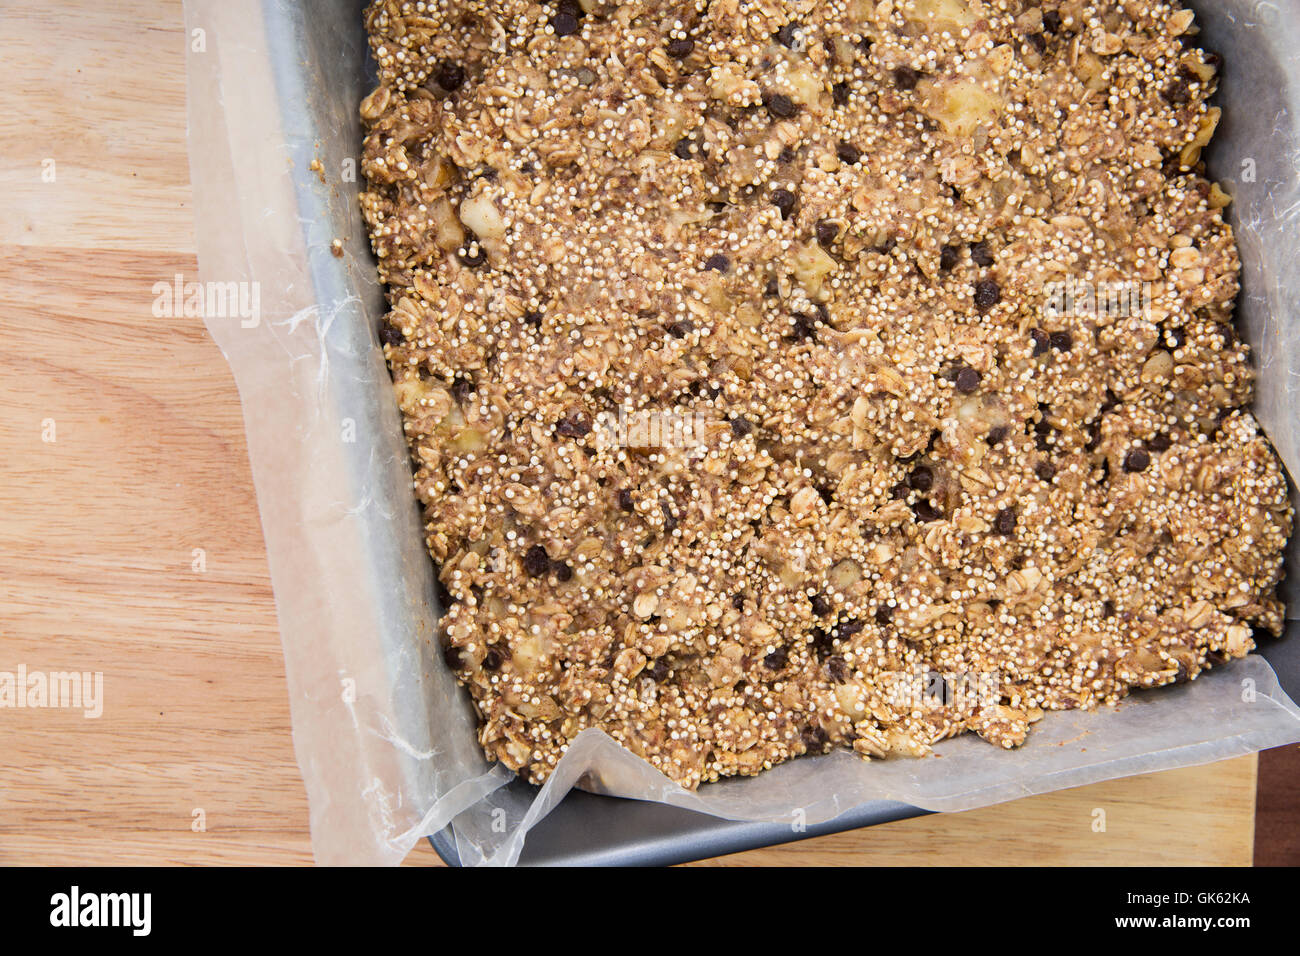 Baking pan full of quinoa and oat bars dough ready for baking Stock Photo